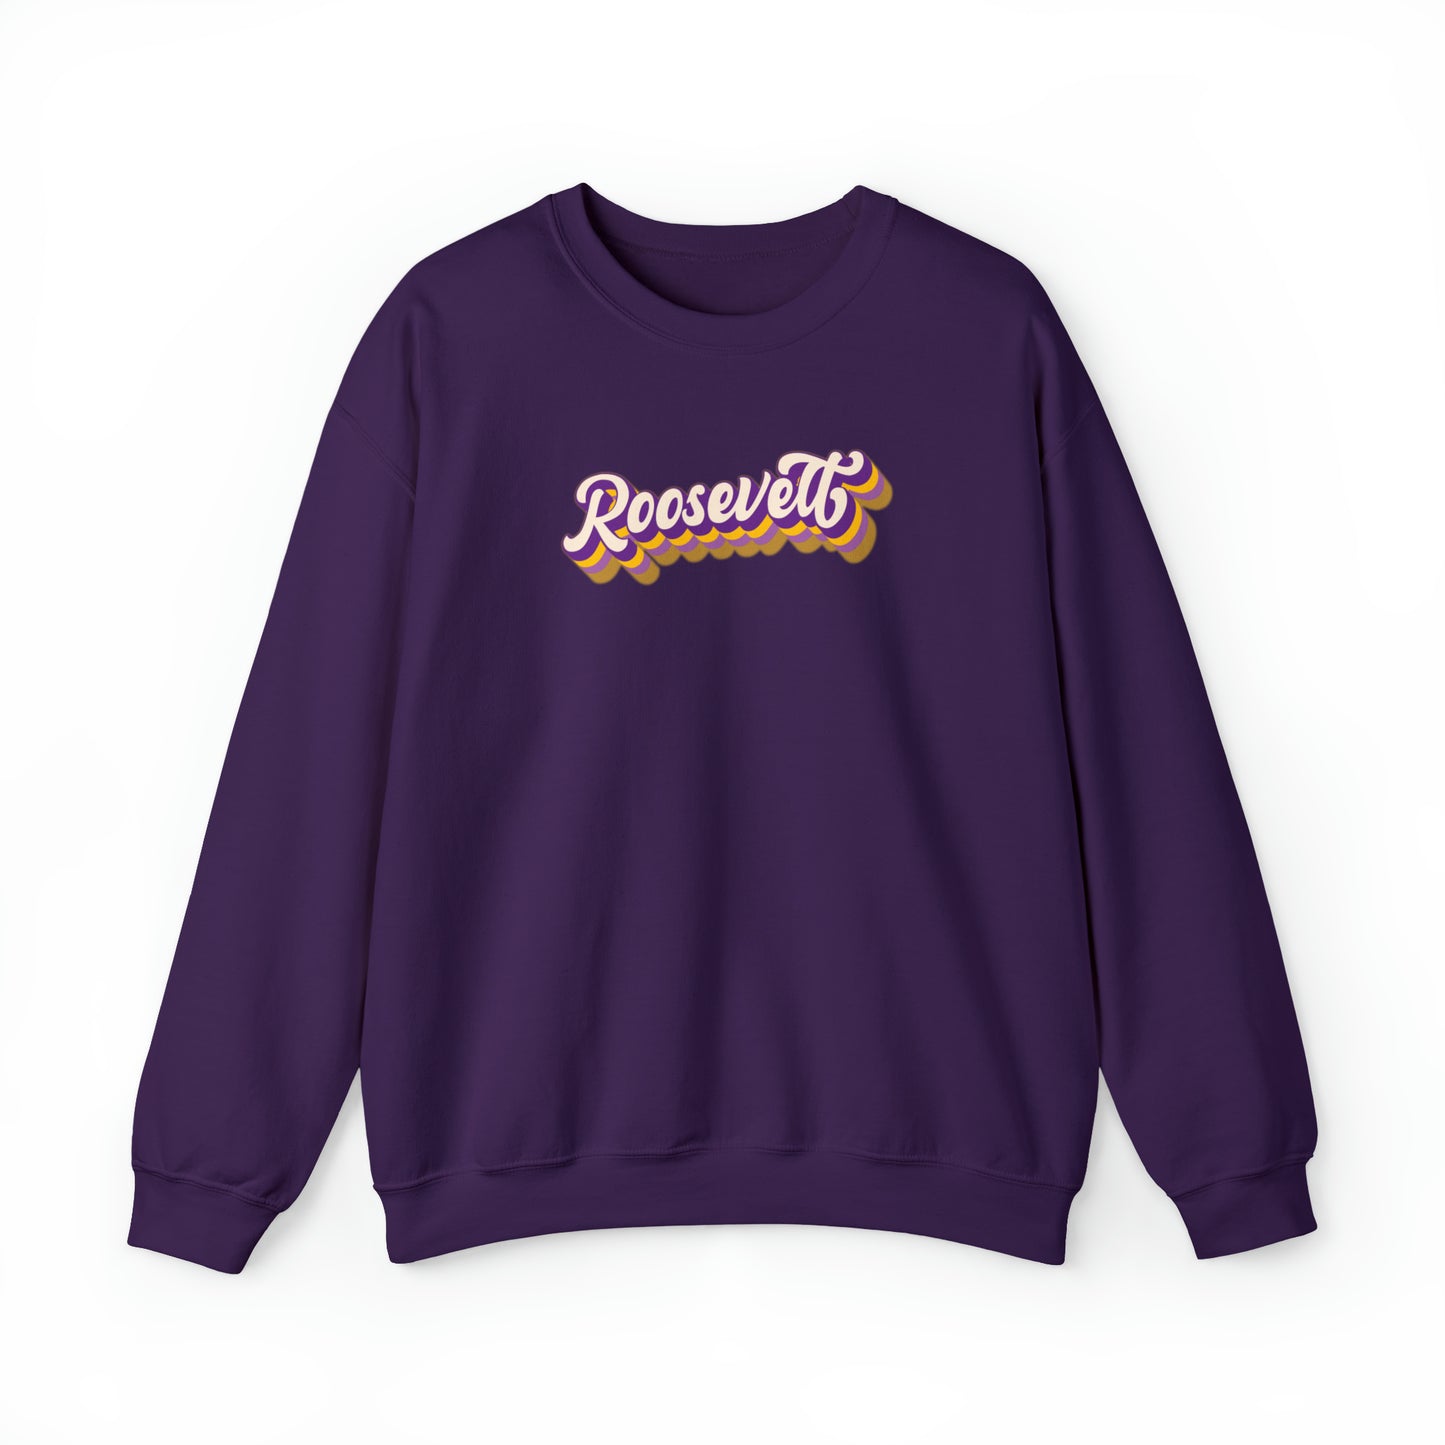 Roosevelt - Crewneck Sweatshirt